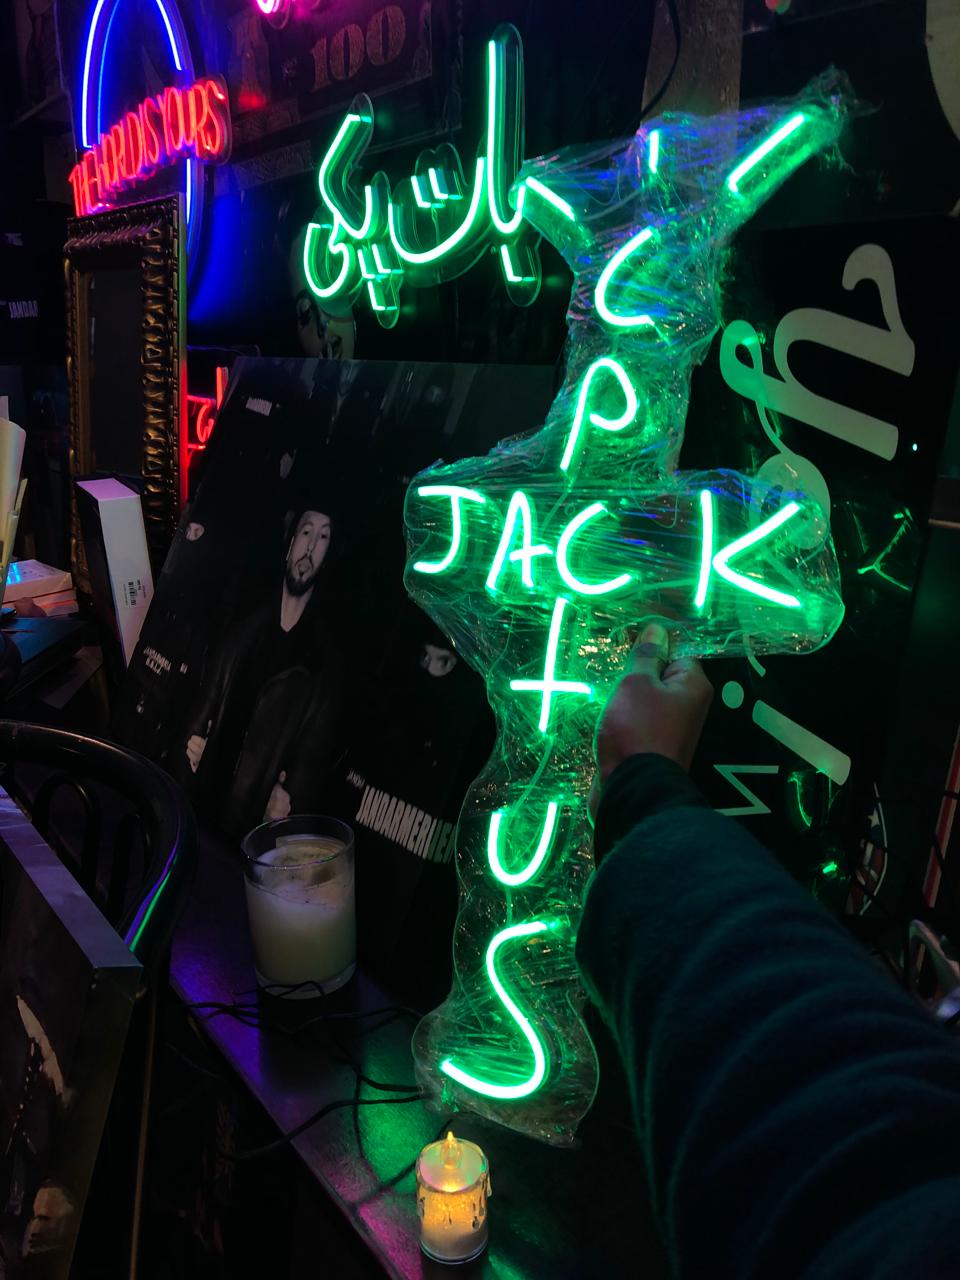 Cactus Jack - Neon sign